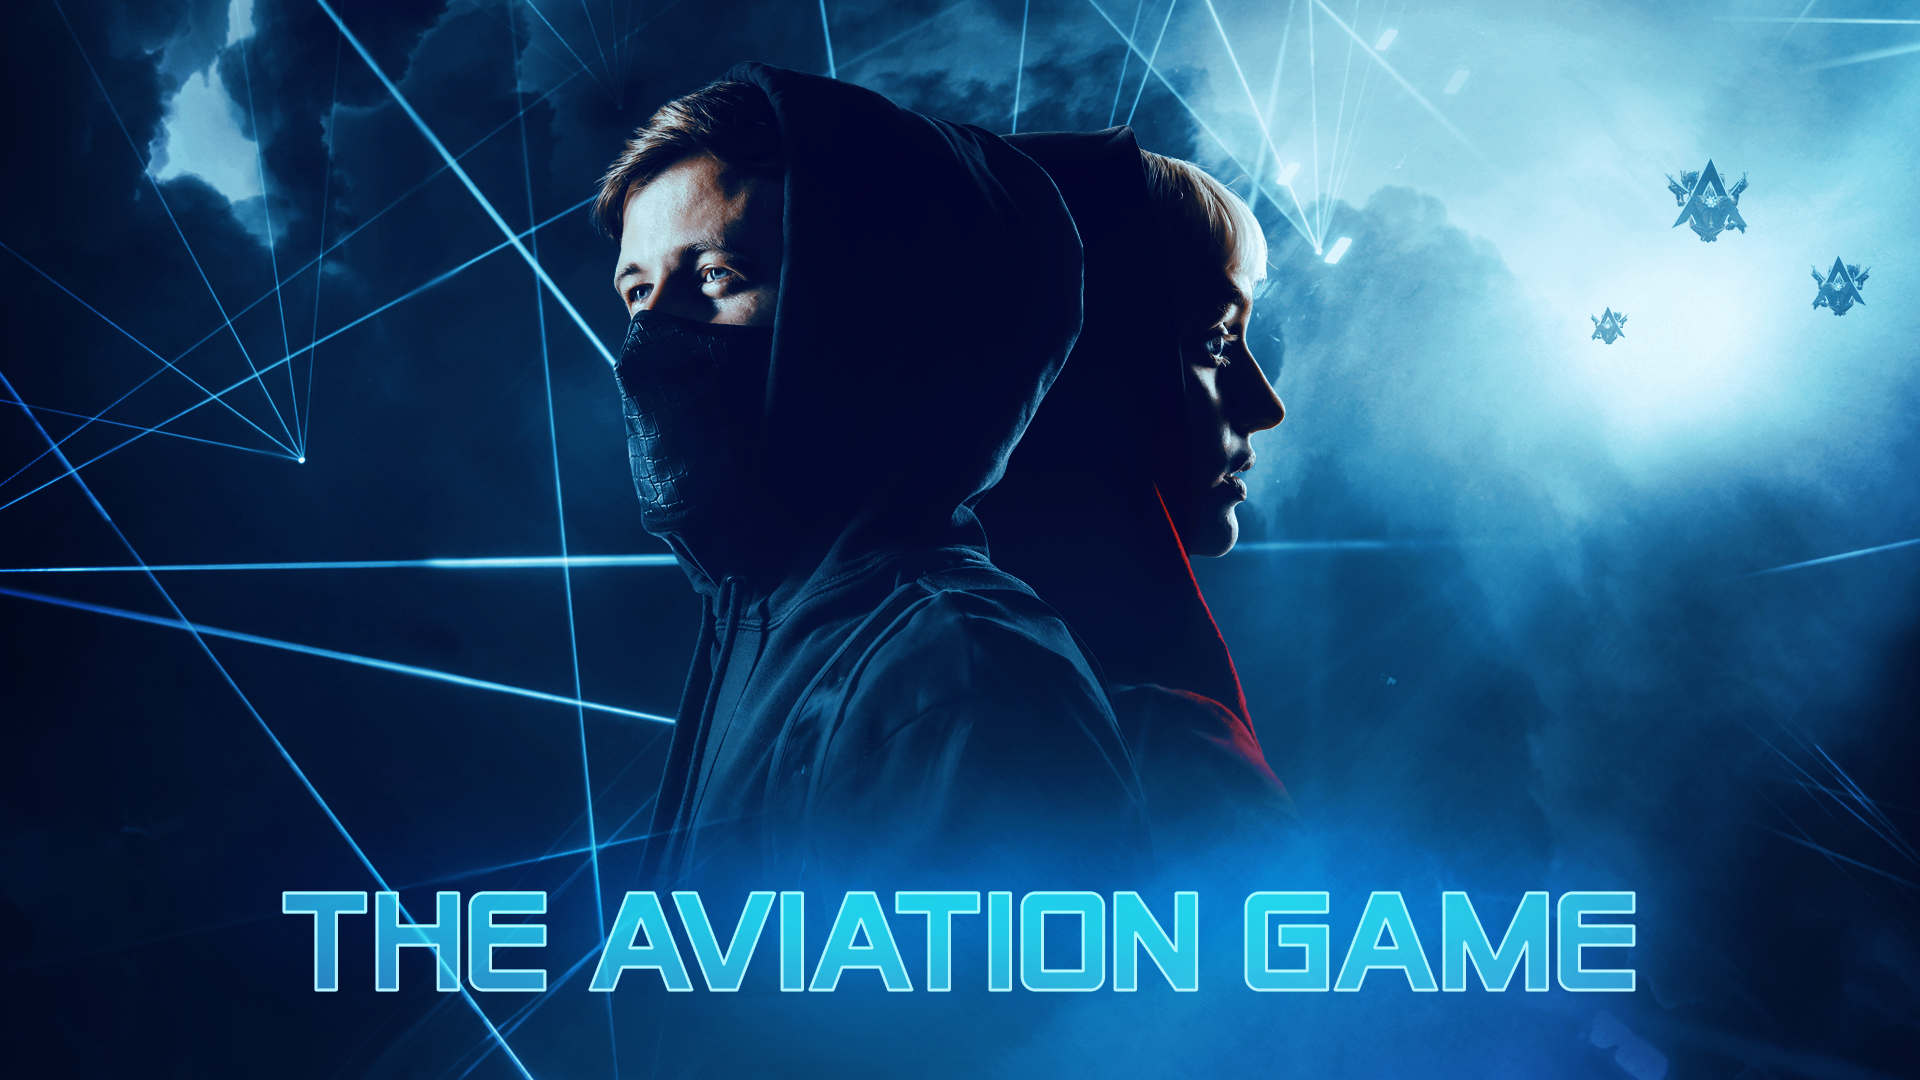 Alan Walker – The Aviation Game